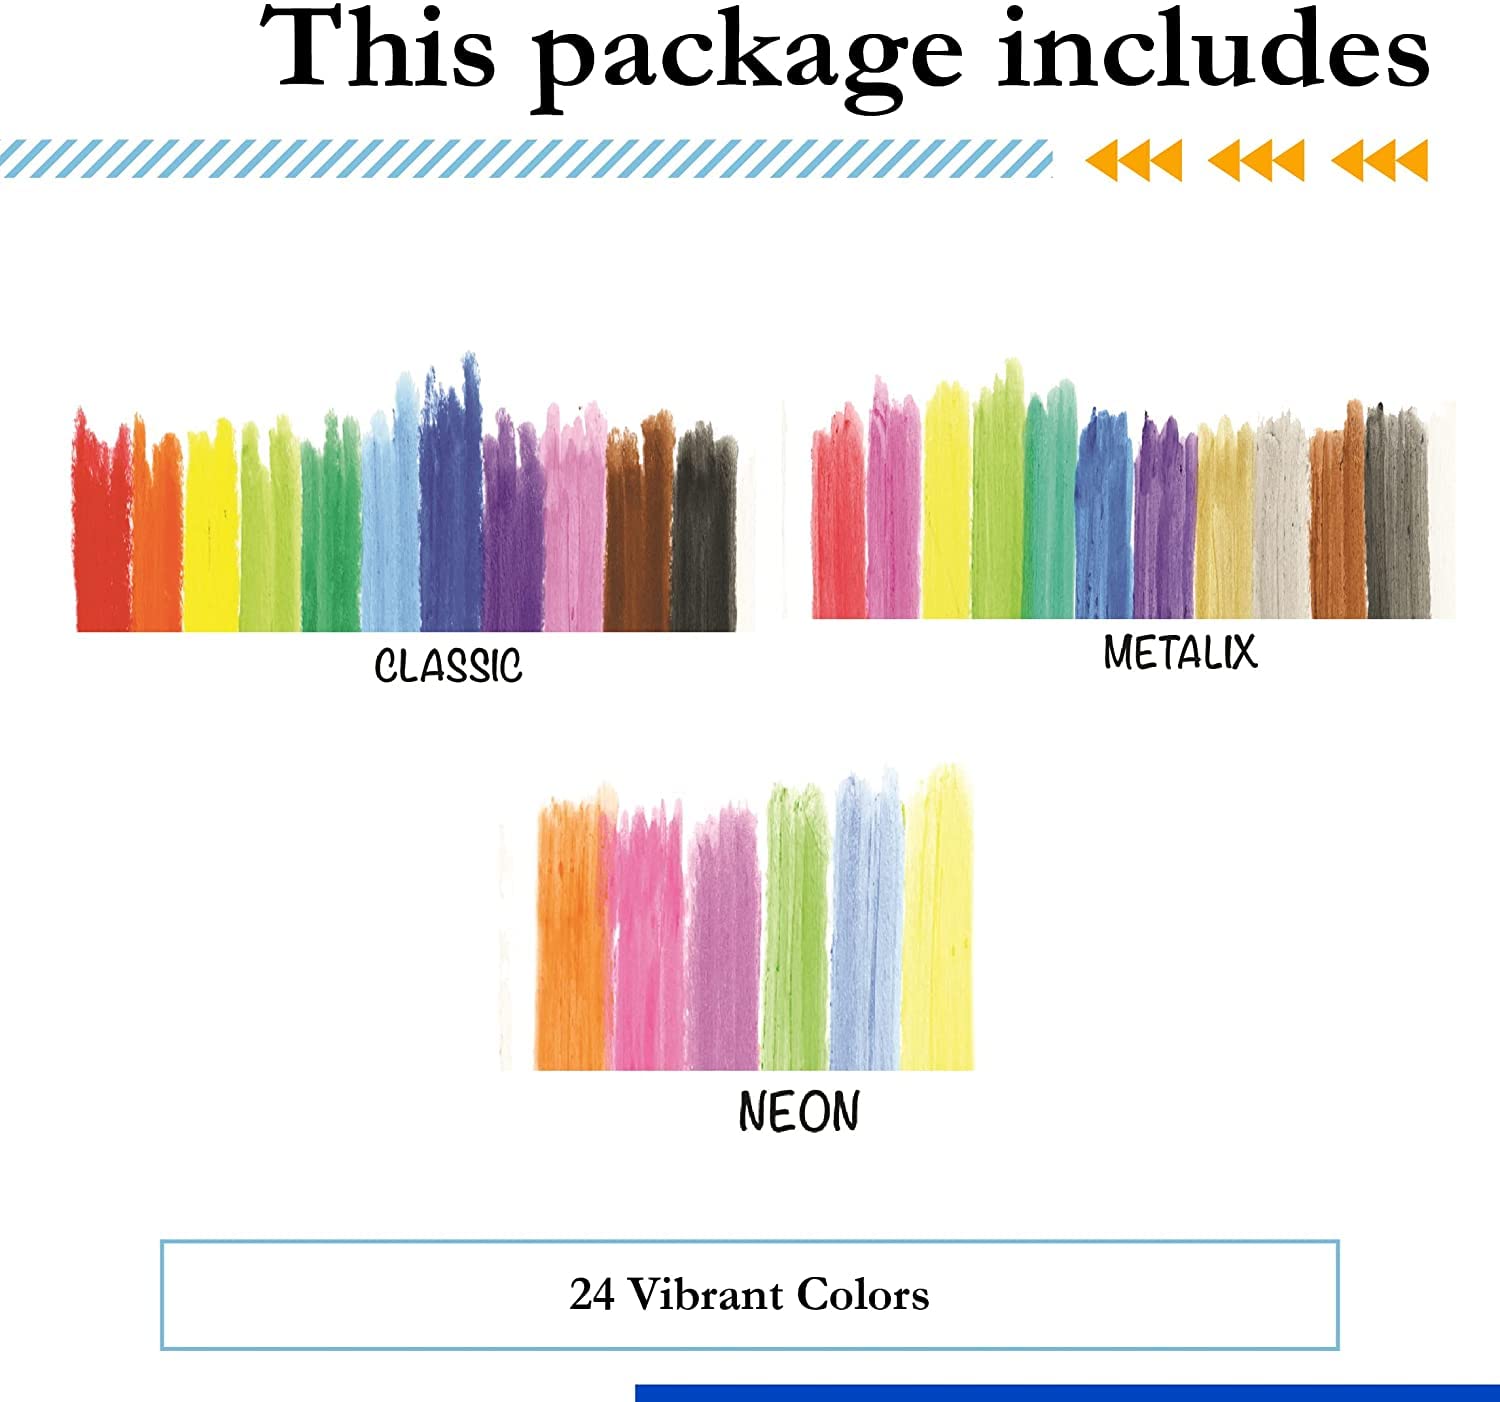 The Pencil Grip Kwik Stix Solid Tempera Paint Pens, Assorted Vibrant Colors, Classic, Metallic & Neon Colors, Super Quick Drying, 24 Count - TPG-604